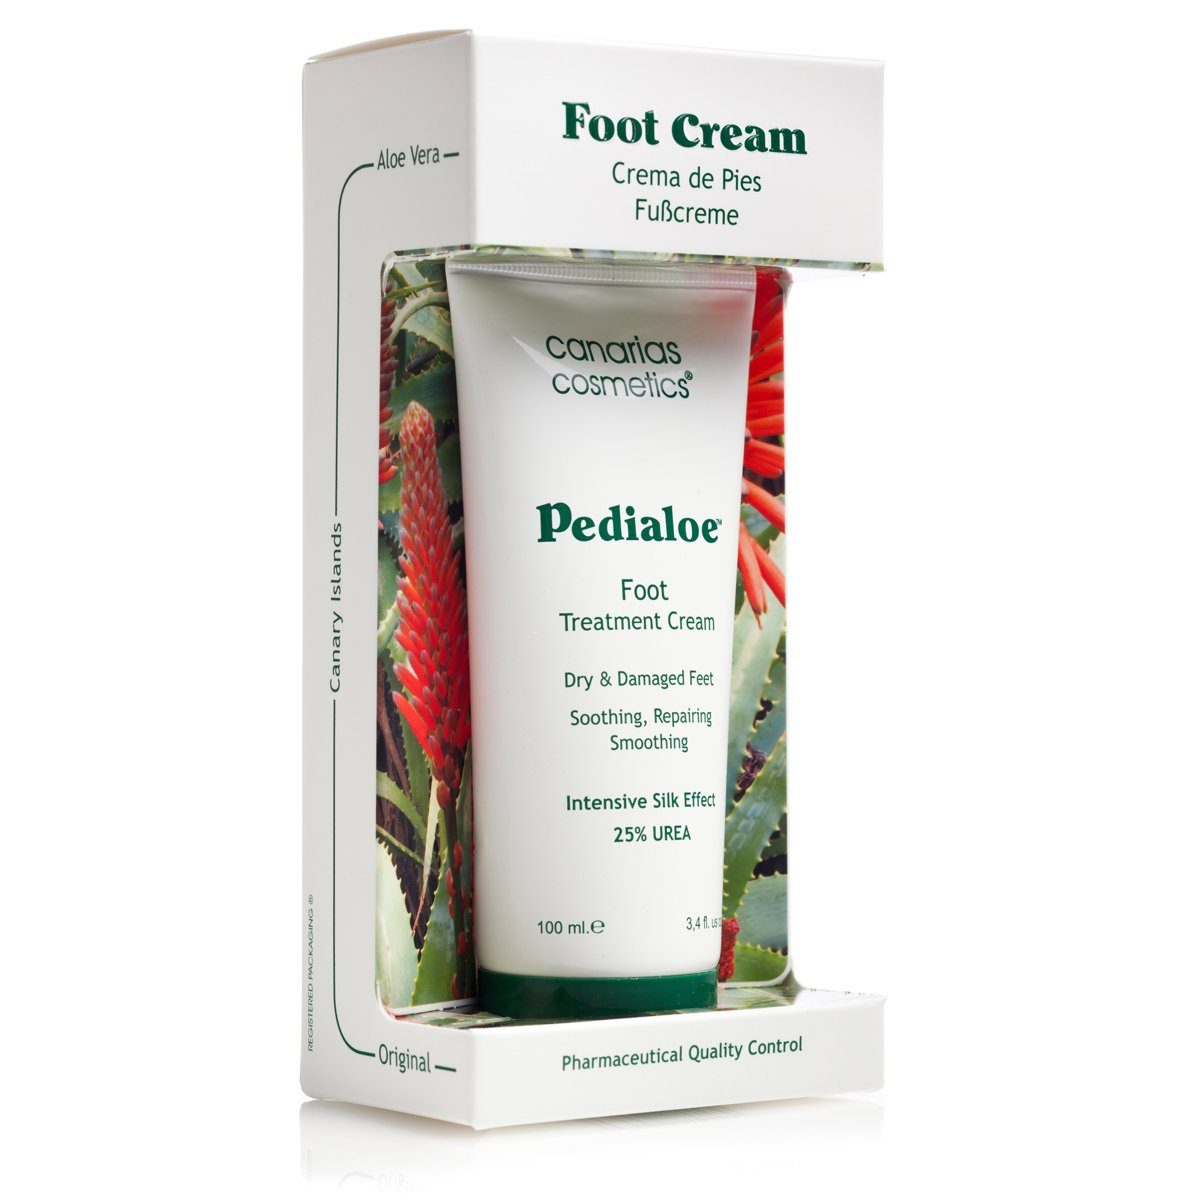 Foot canarias Pedialoe cosmetics Fußcreme ml) Treatment (100 Cream